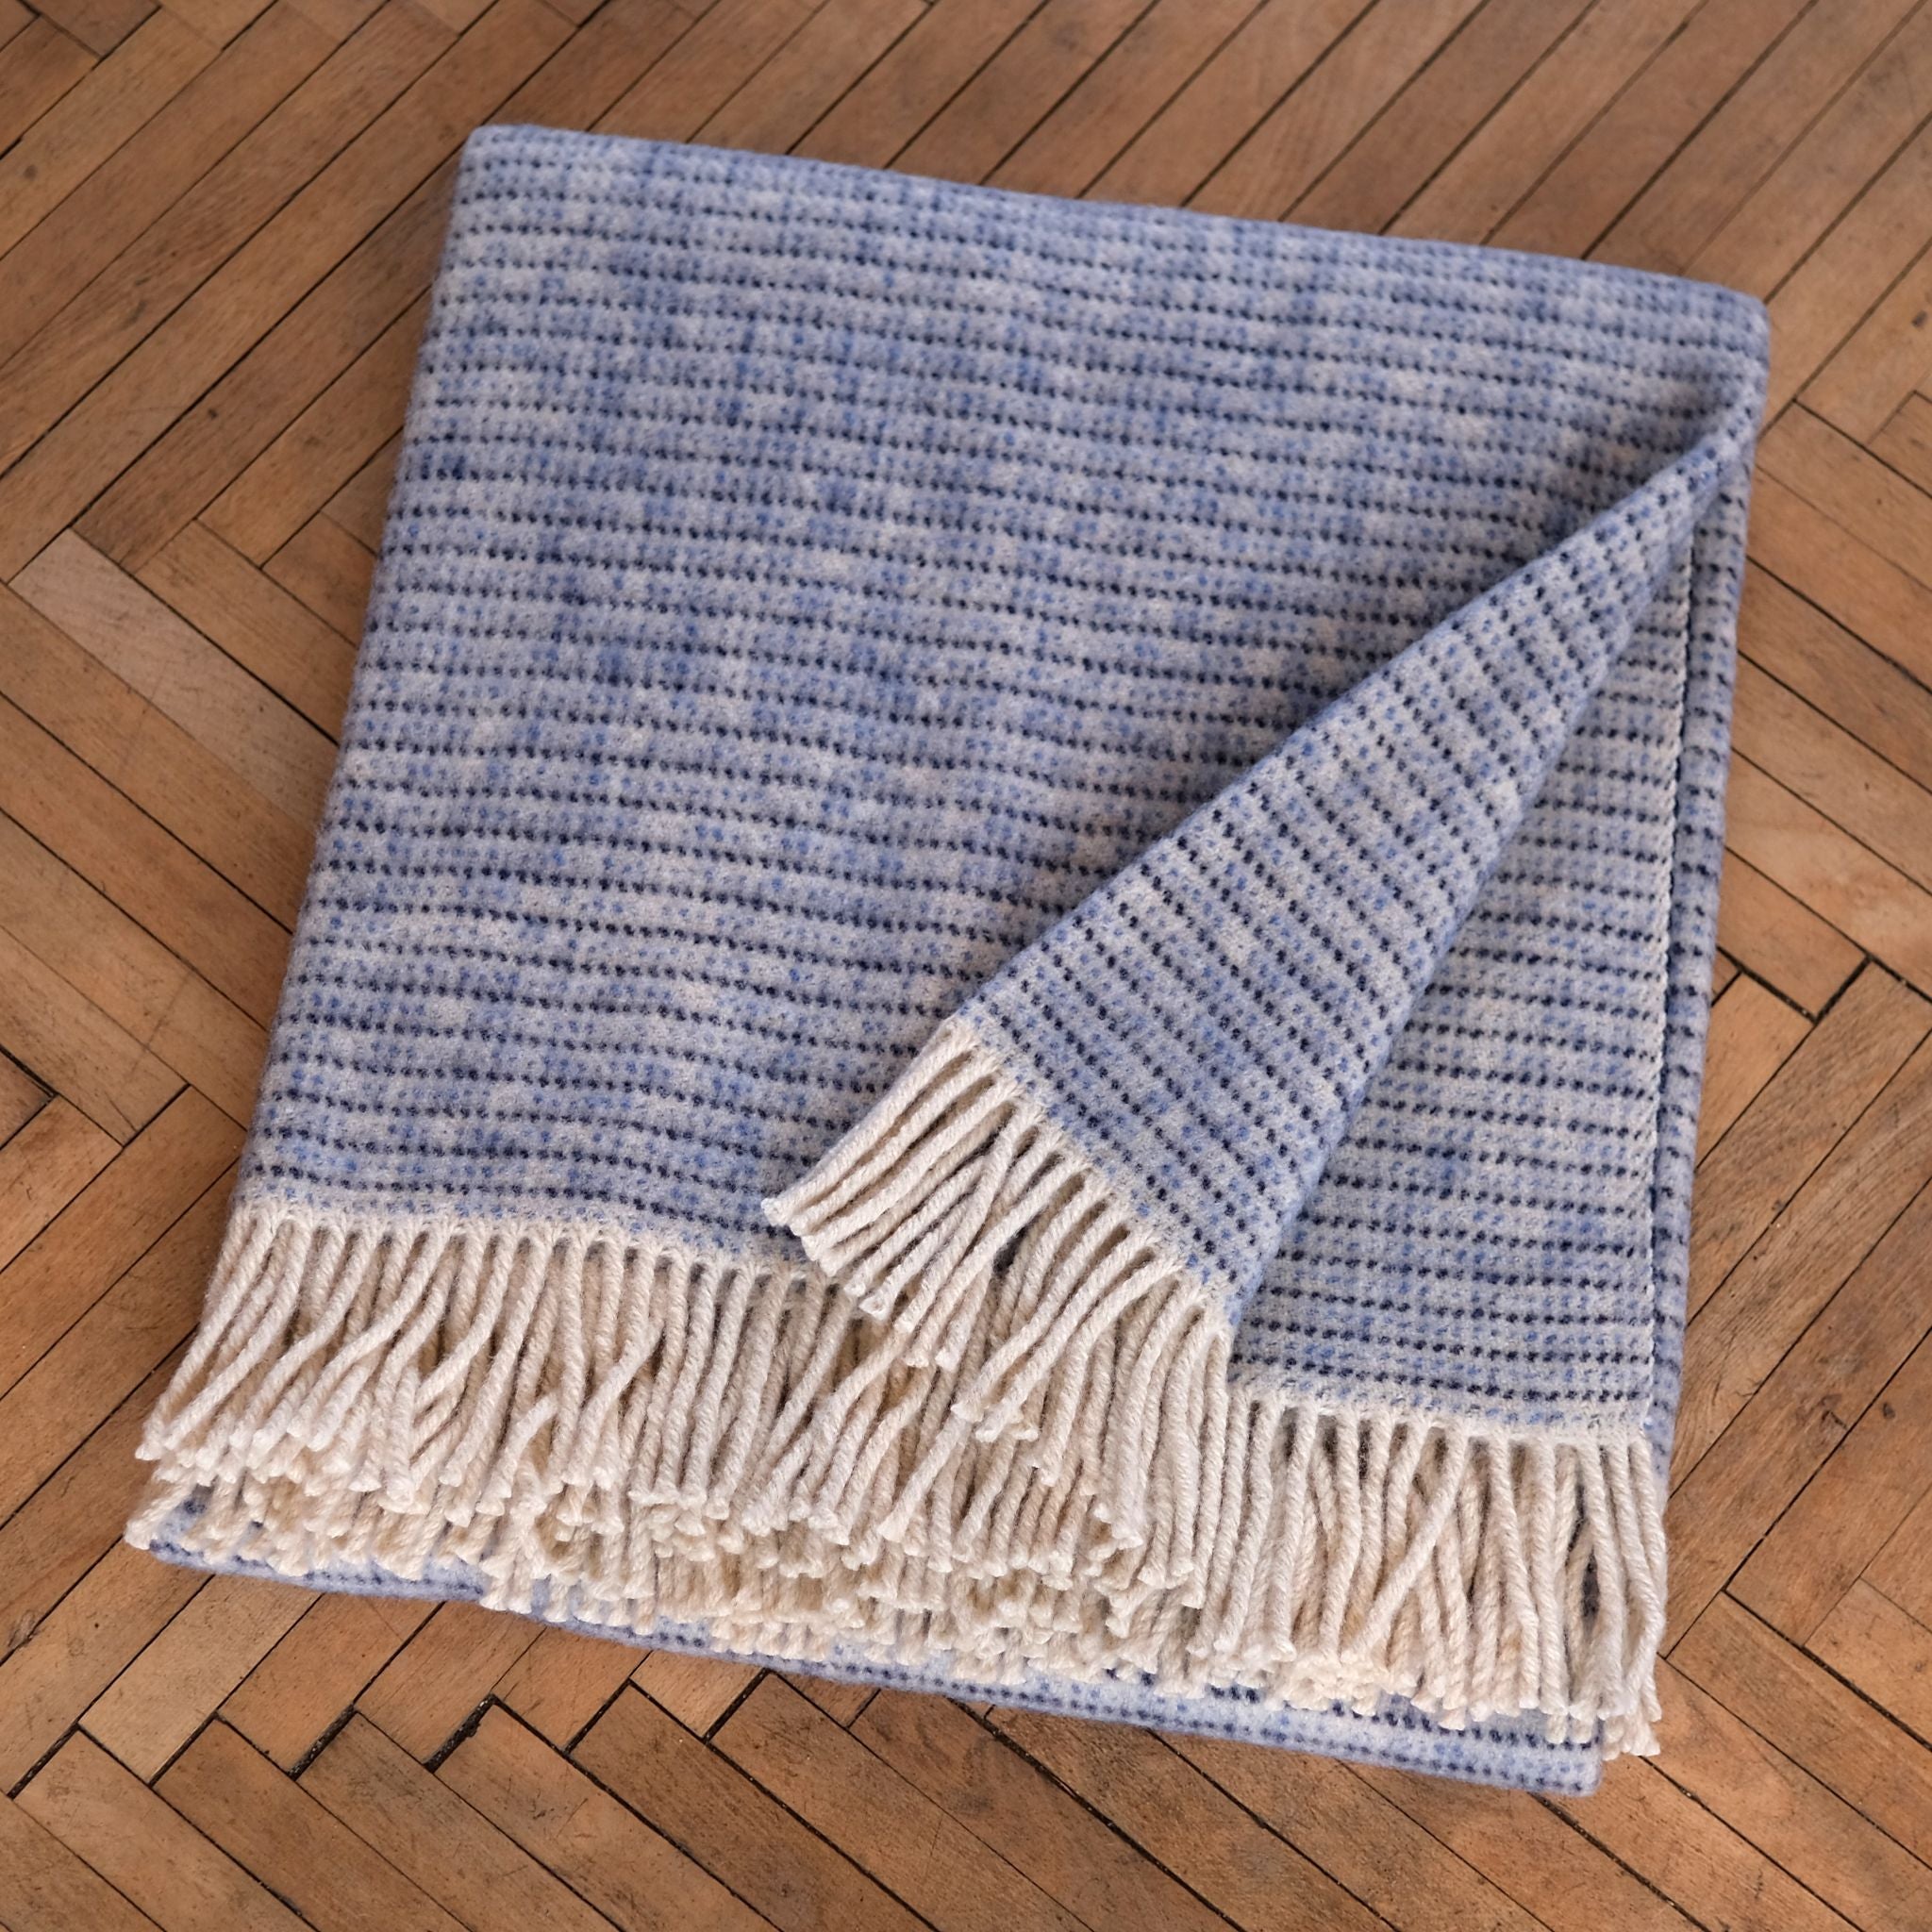 Sheep wool blanket - blue striped